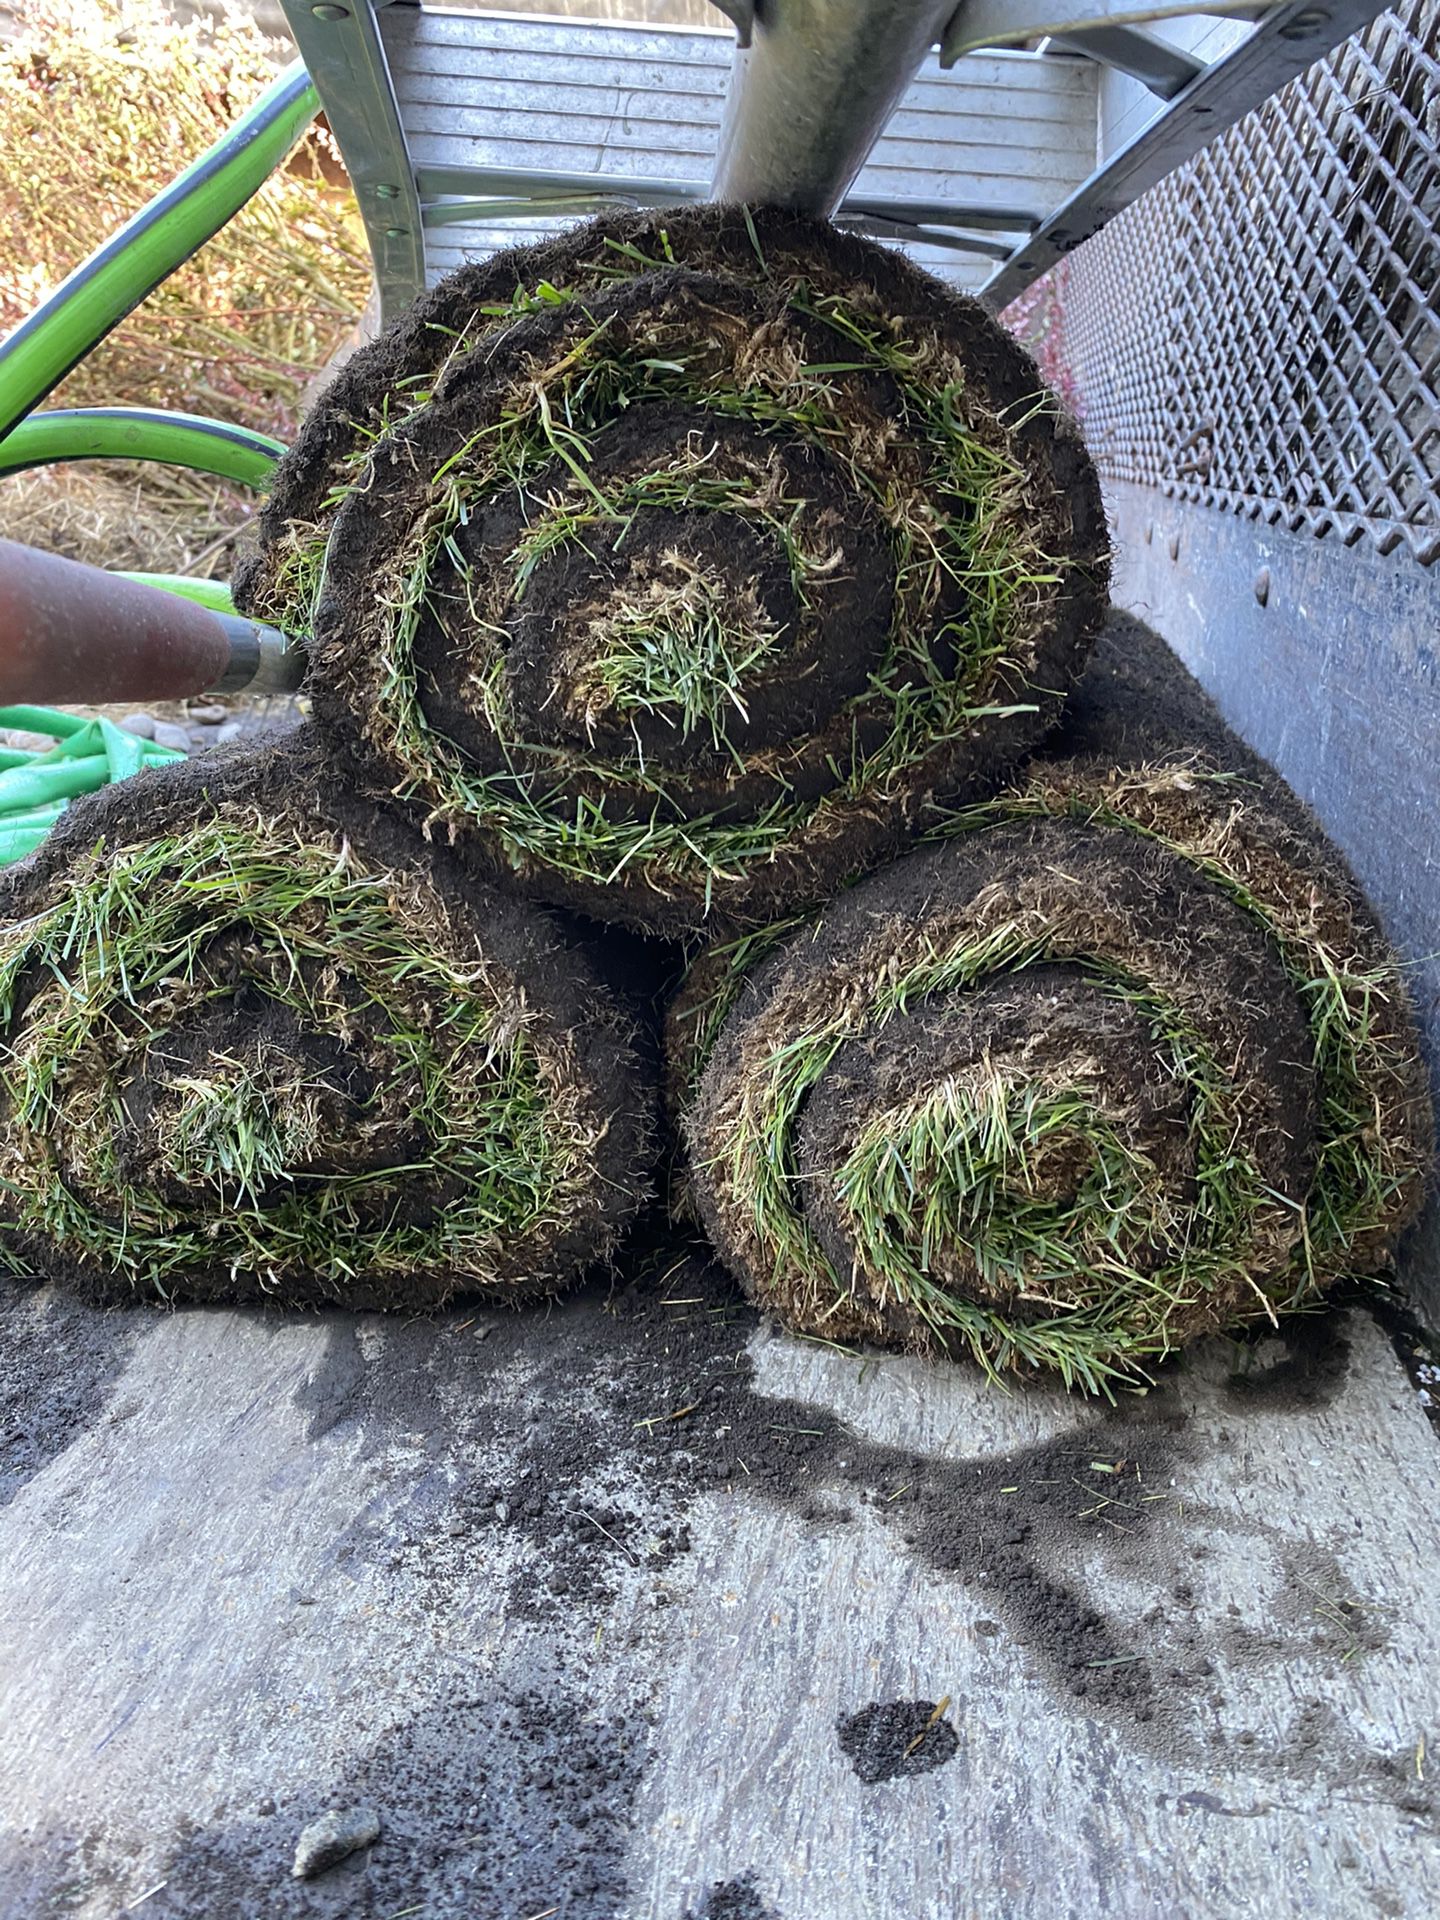 3 rolls of sod